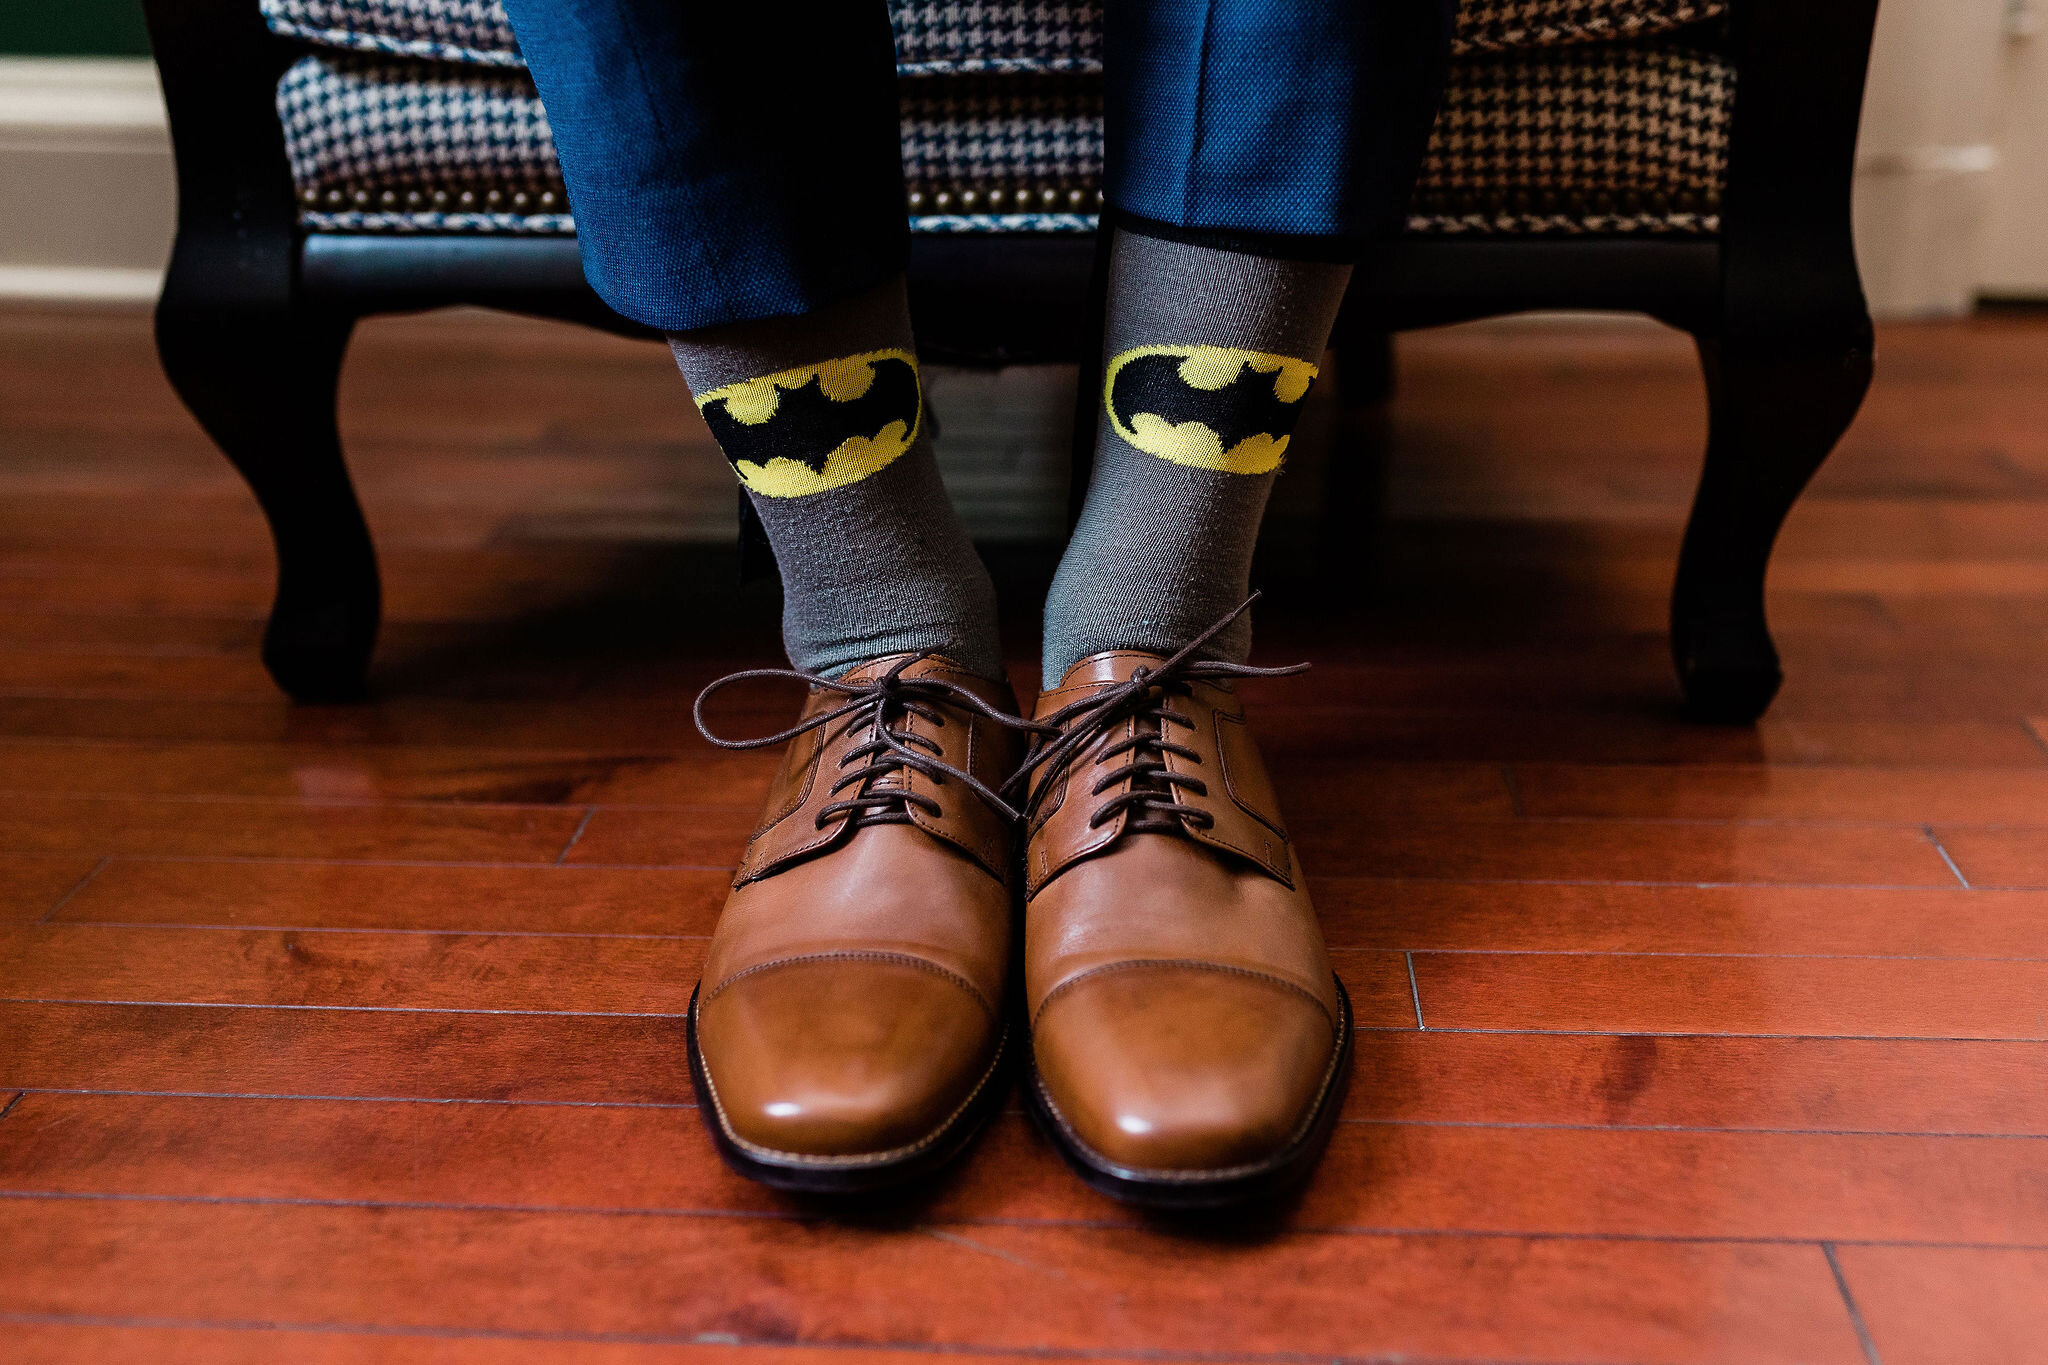 Groom's shoes and batman socks